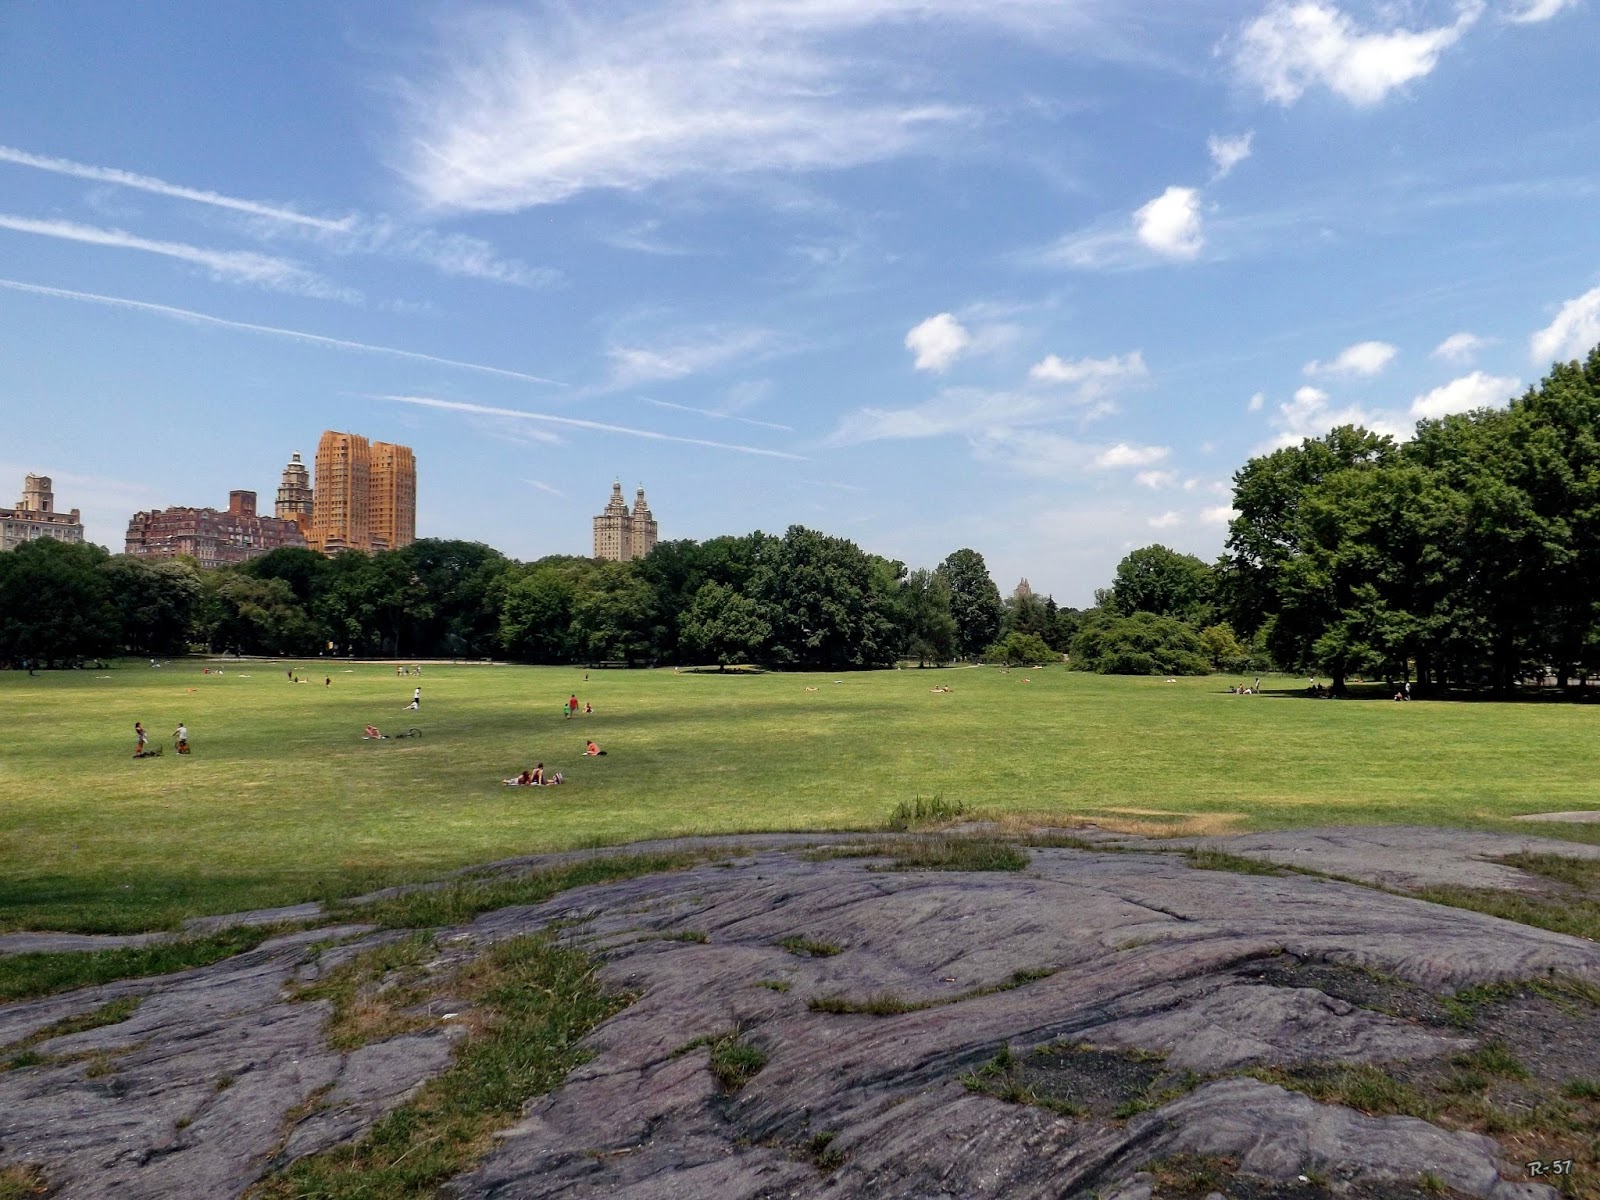 Photo of Parque y entrada estatua libertad in New York City, New York, United States - 4 Picture of Point of interest, Establishment, Park